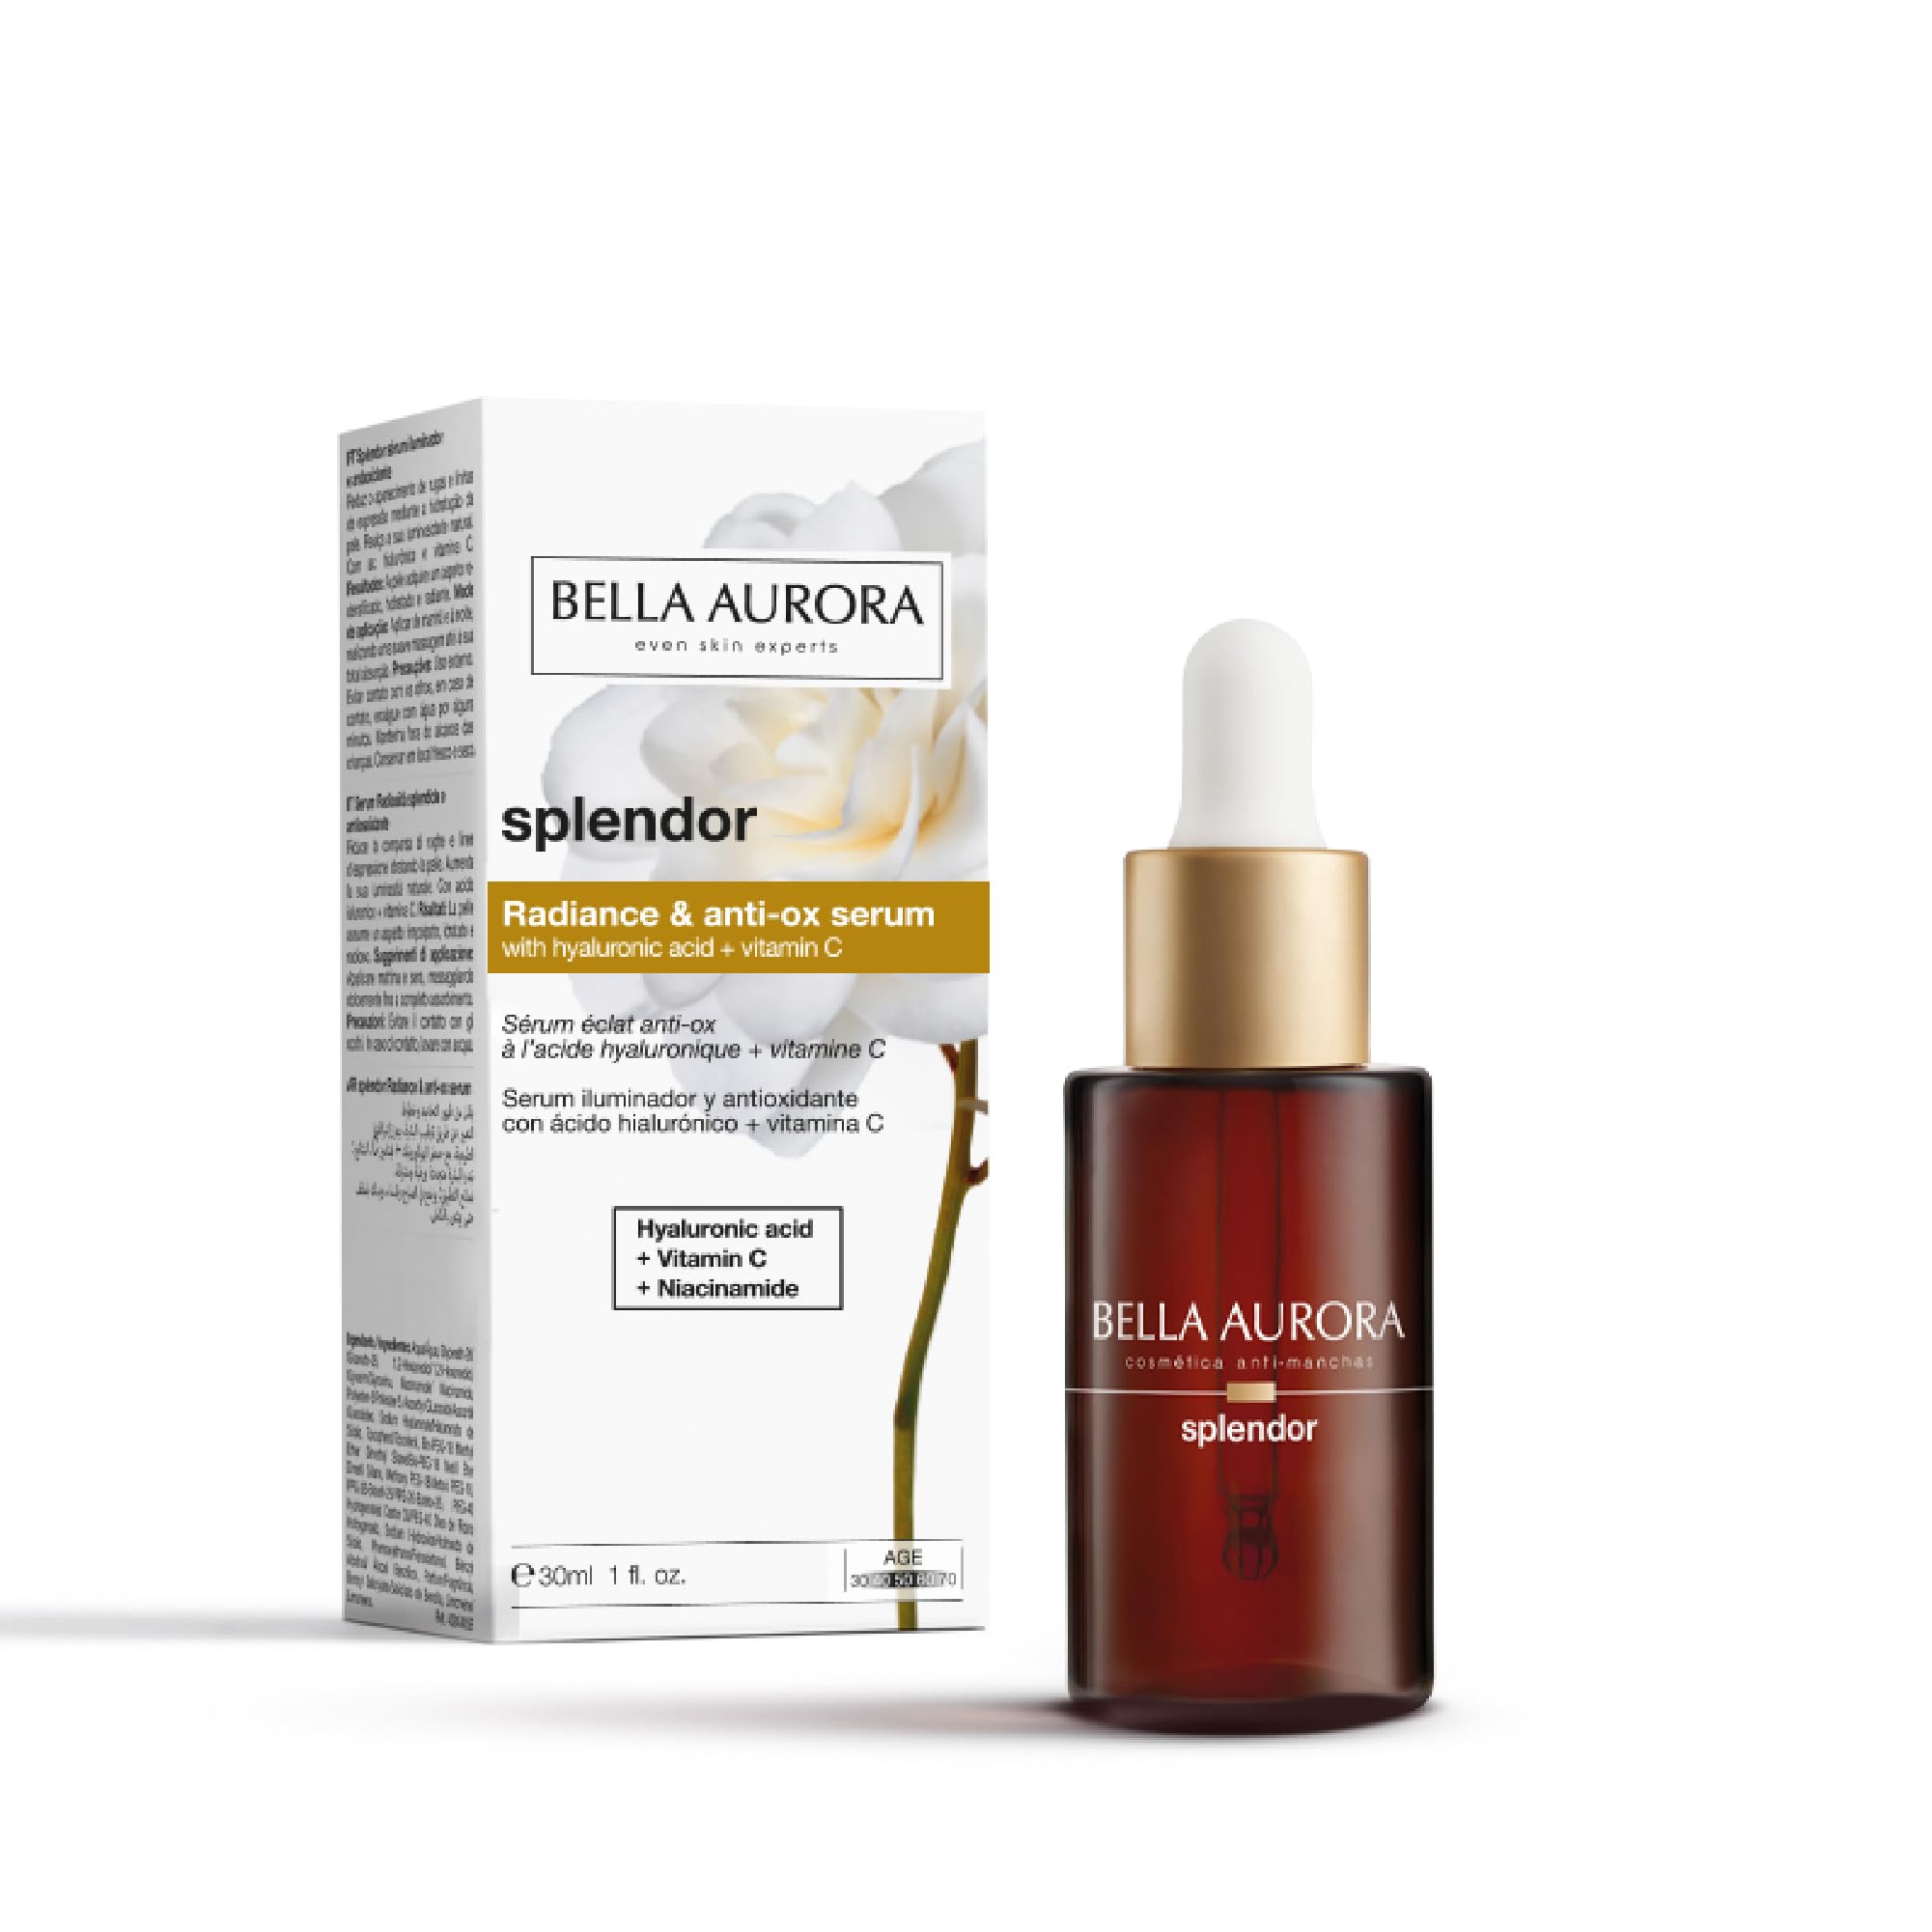 Bella Aurora, Splendor Vitamin C + Hyaluronsäure + Niacinamid, Radiance and Antioxidant Serum, Anti-Ageing Serum in Vials, Anti-Macchia, Anti-Wrinkle (Dropper 30 ml)